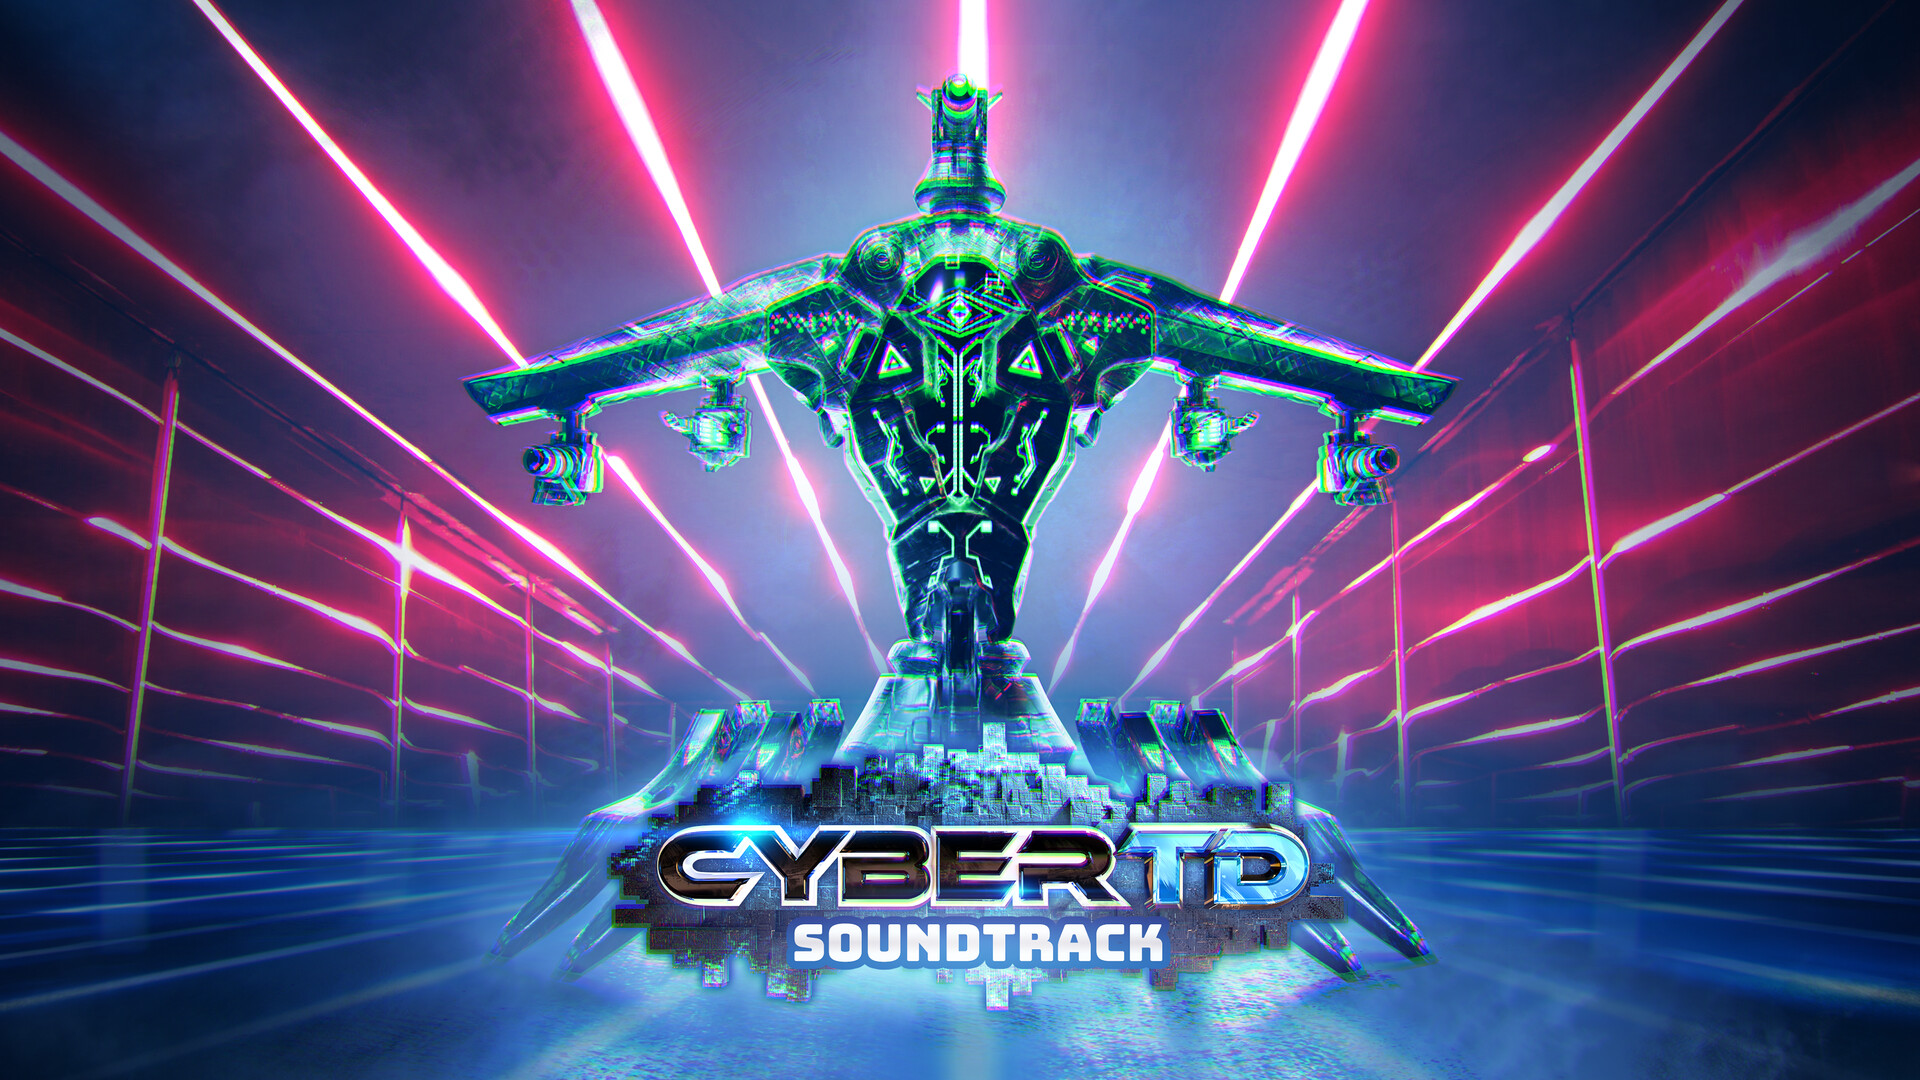 CyberTD Soundtrack Featured Screenshot #1